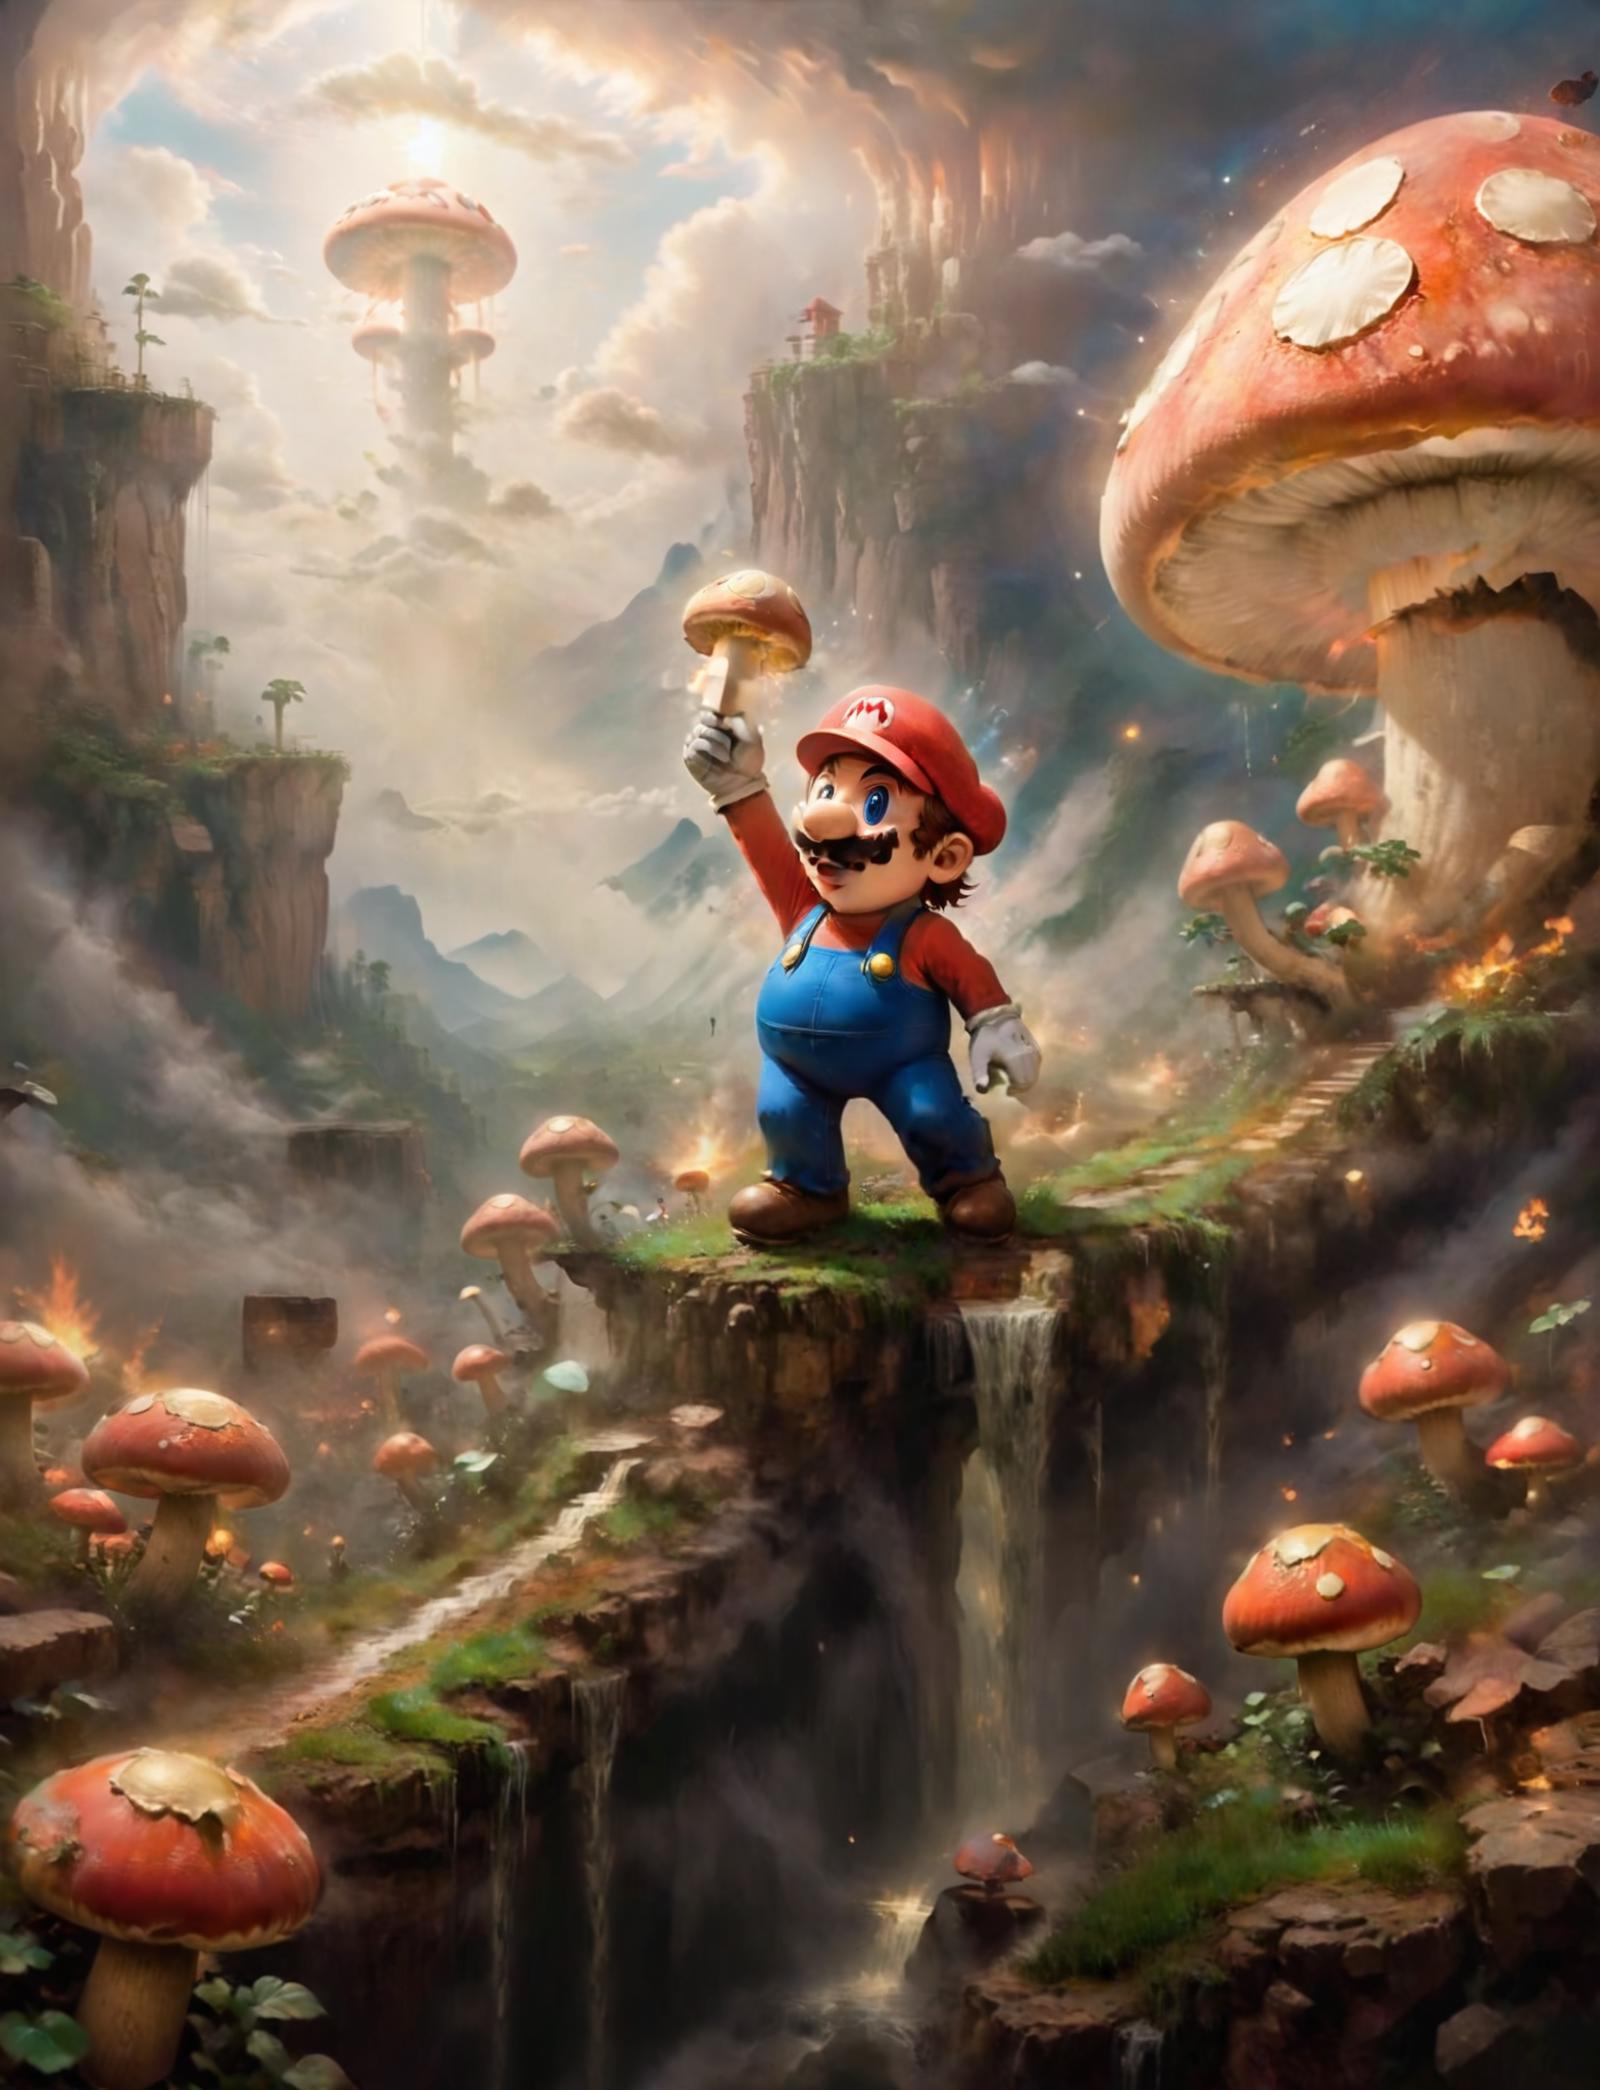 Artistic Painting of Mario Holding a Mushroom in a Mushroom-Themed Landscape